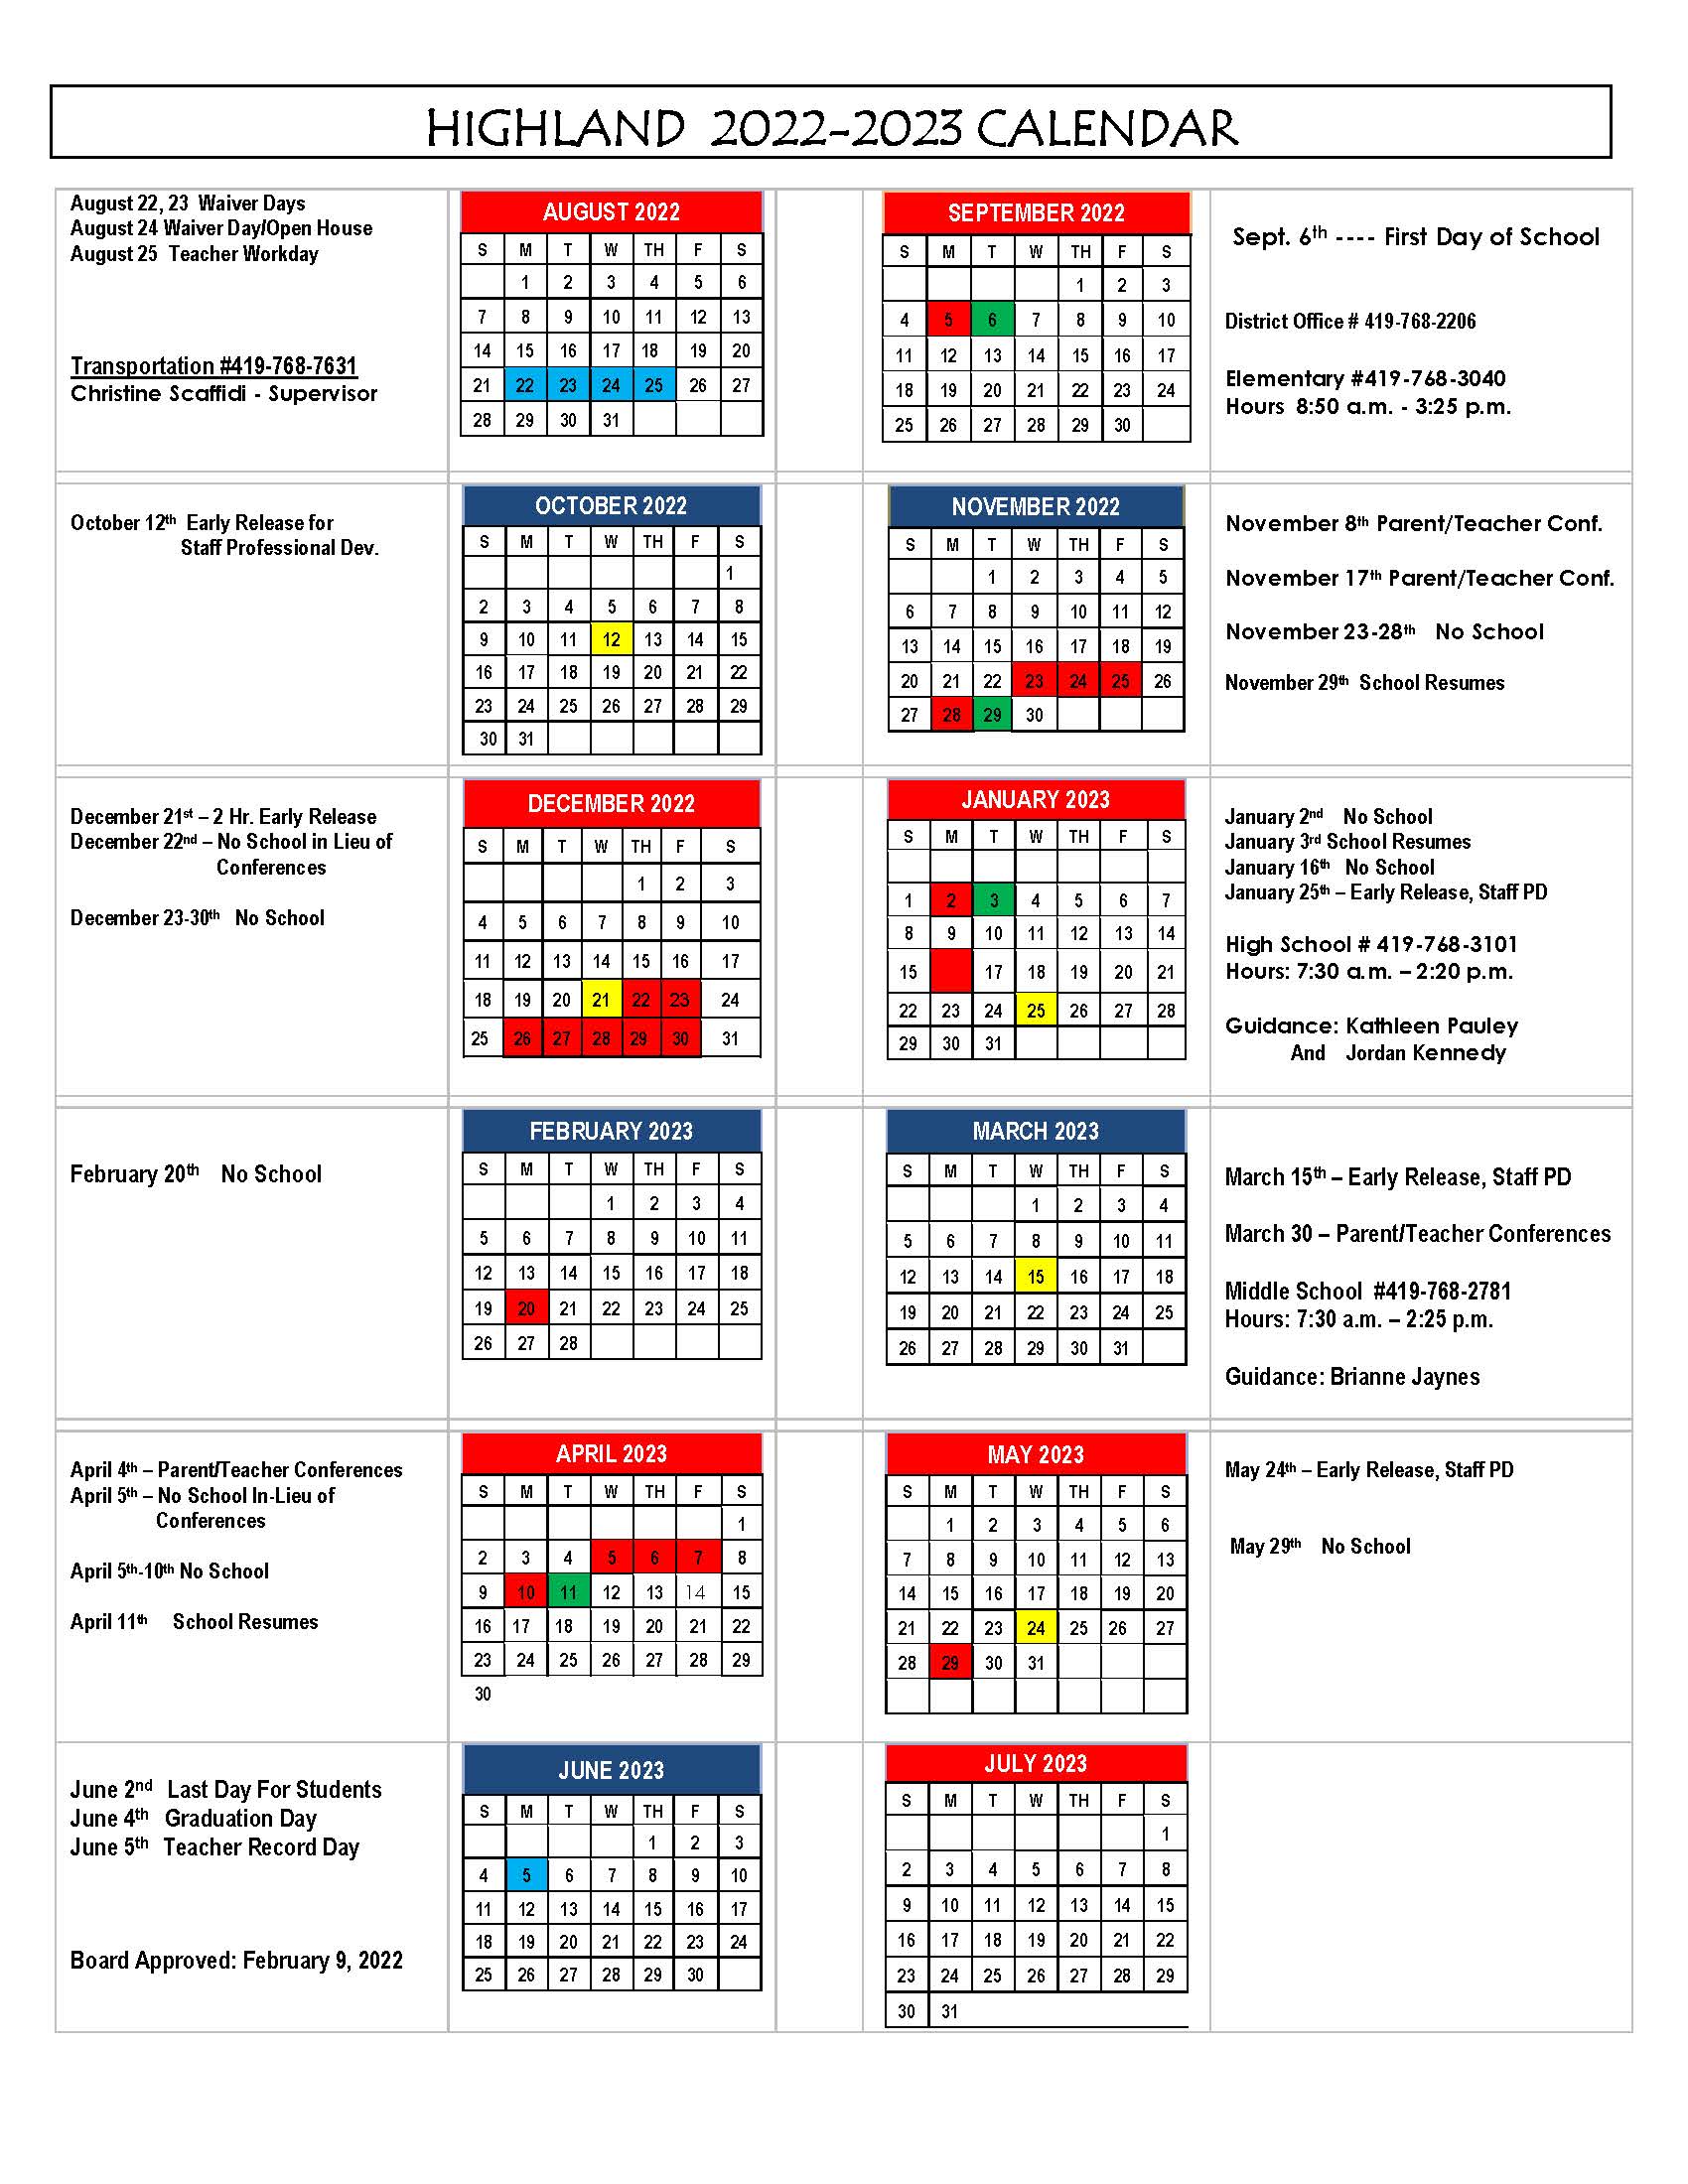 calendar-highland-local-schools